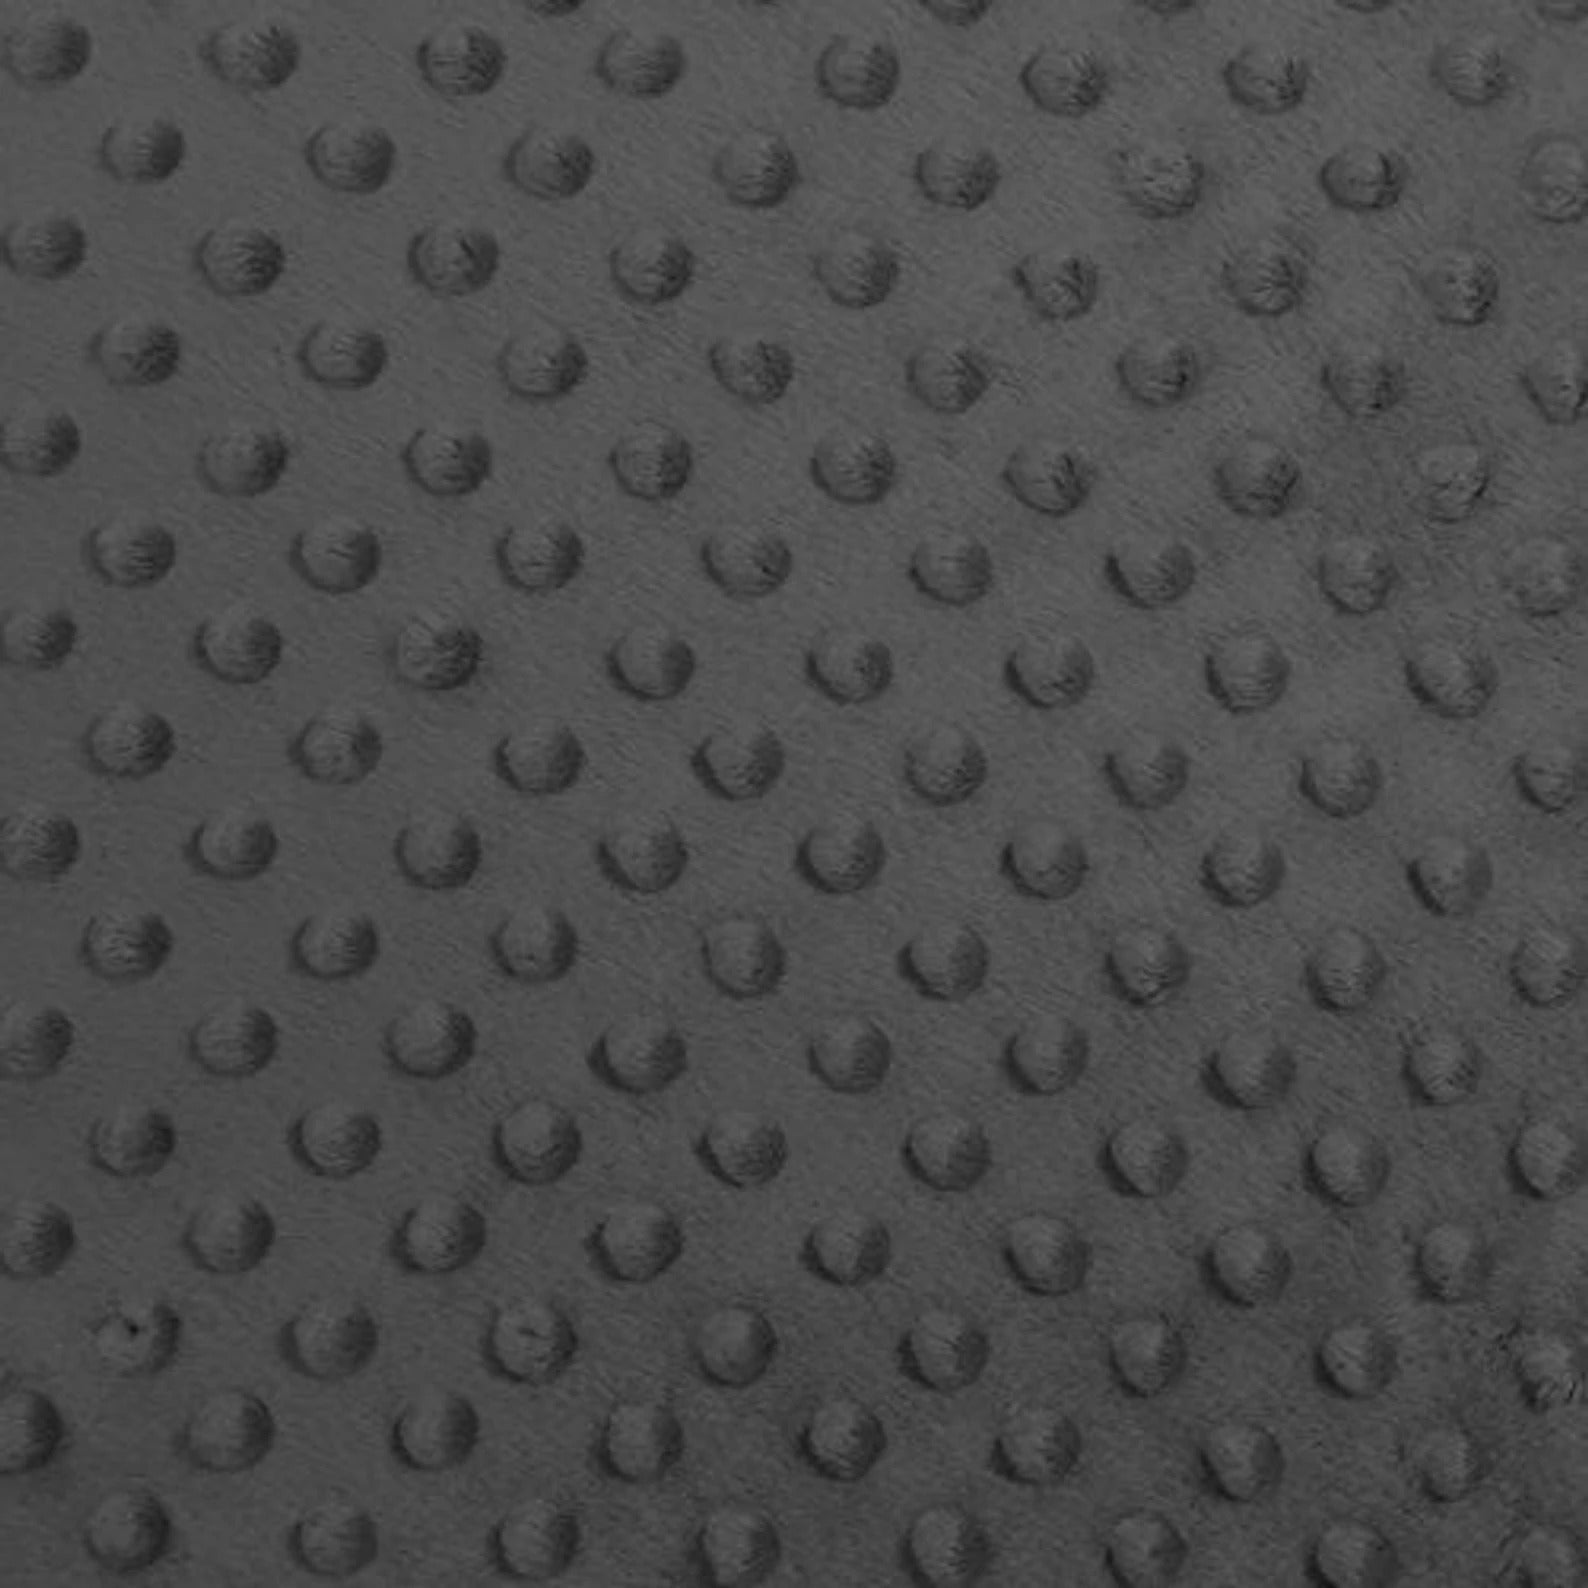 Dimple Dot Minky Fabric Sold By The Yard - 36"/ 58"MinkyICEFABRICICE FABRICSCharcoal GrayBy The Yard (60 inches Wide)Dimple Dot Minky Fabric Sold By The Yard - 36"/ 58" ICEFABRIC Charcoal Gray